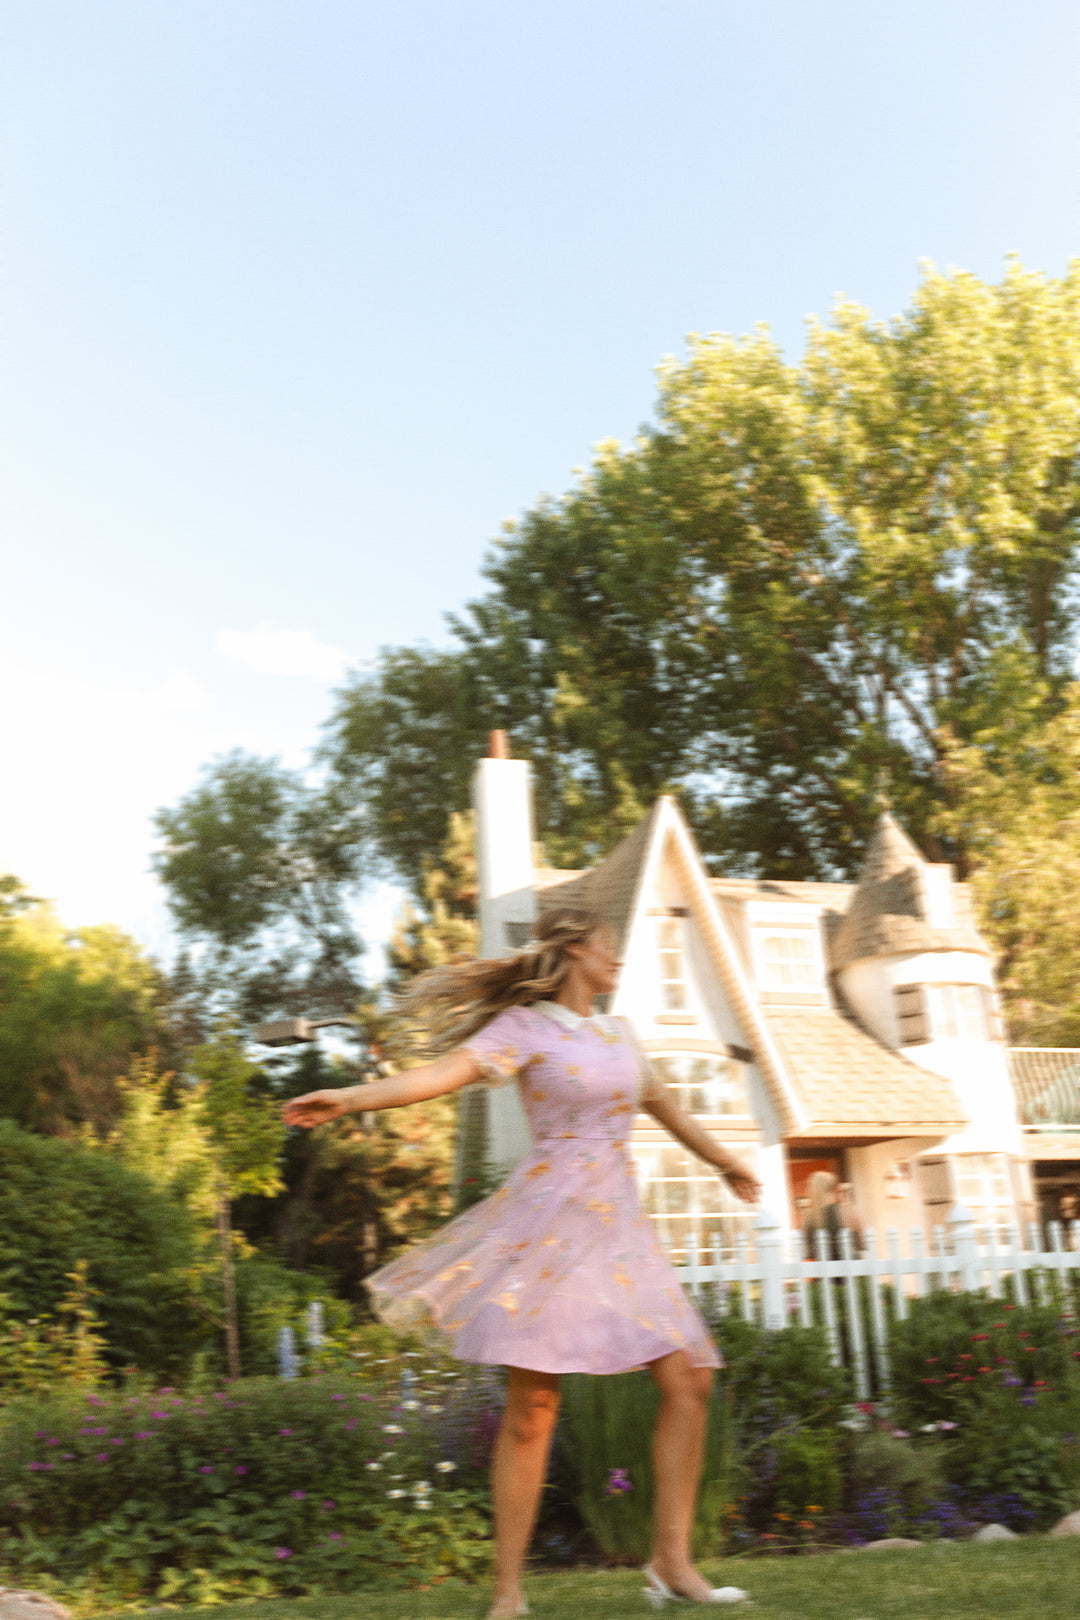 Penelope Dress in Lilac